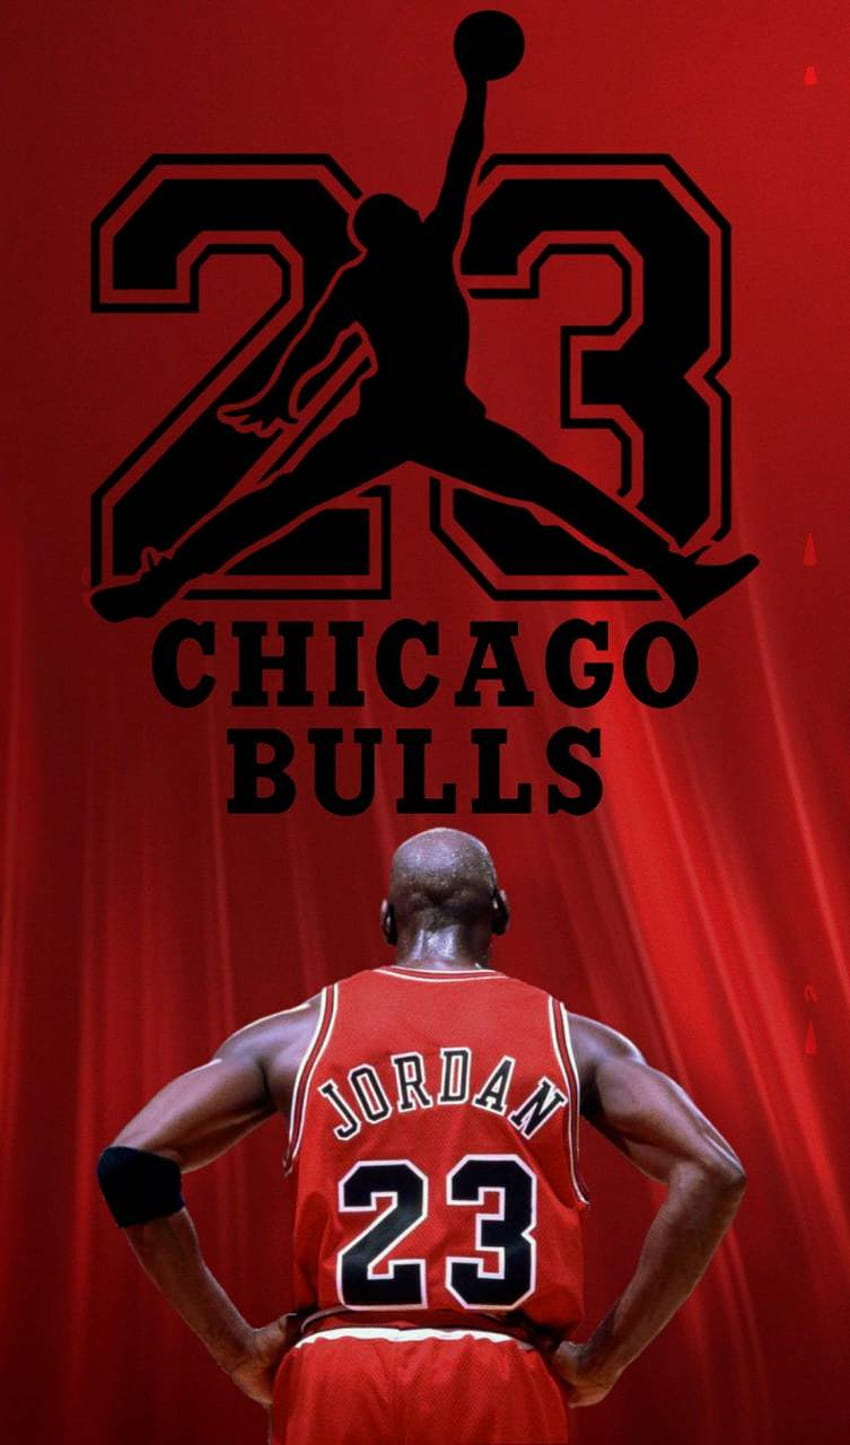 Michael Jordan 23, Michael Jordan banteng Chicago wallpaper ponsel HD